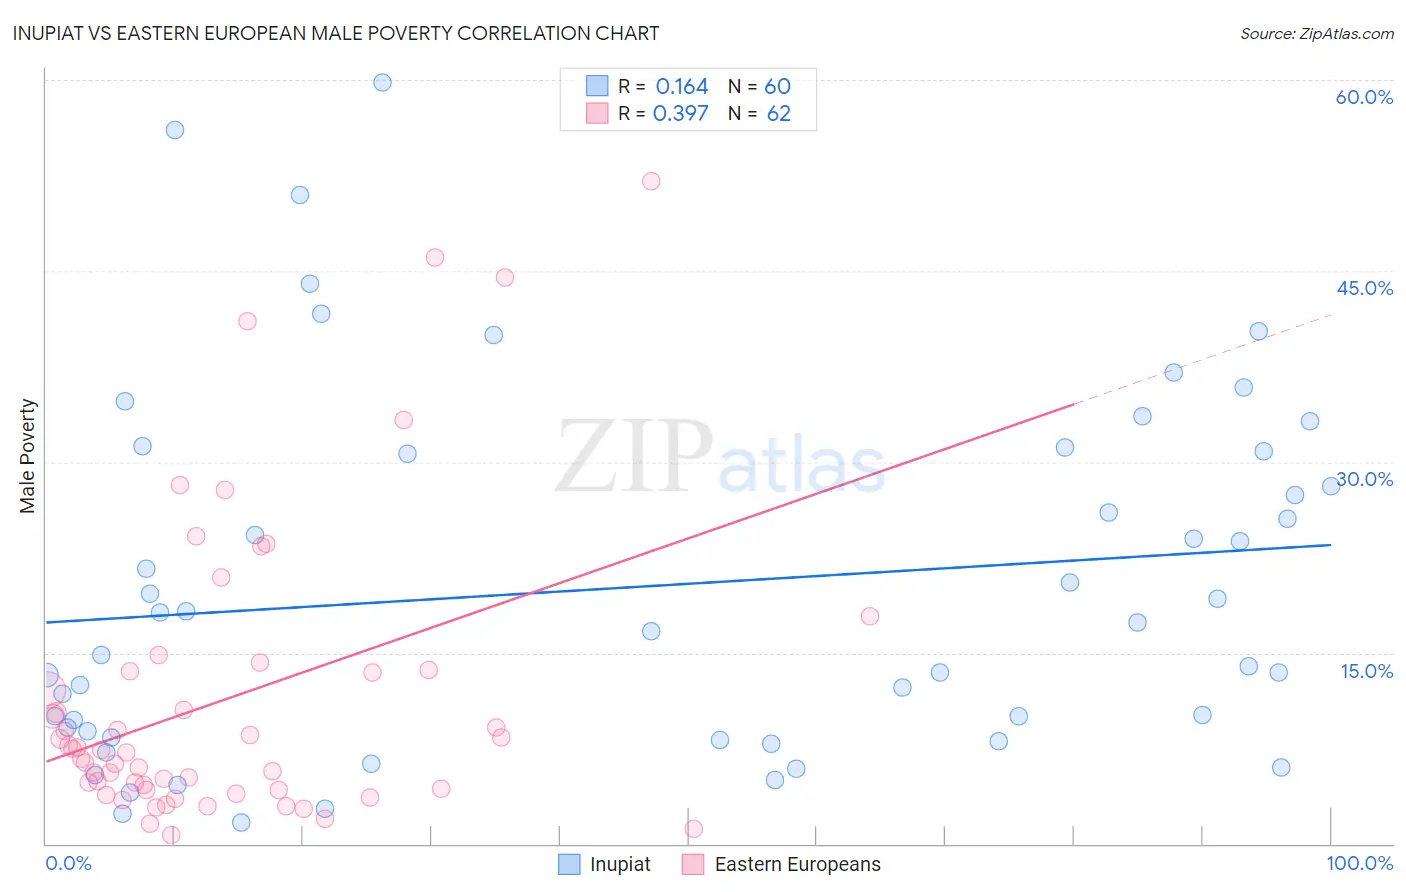 Inupiat vs Eastern European Male Poverty